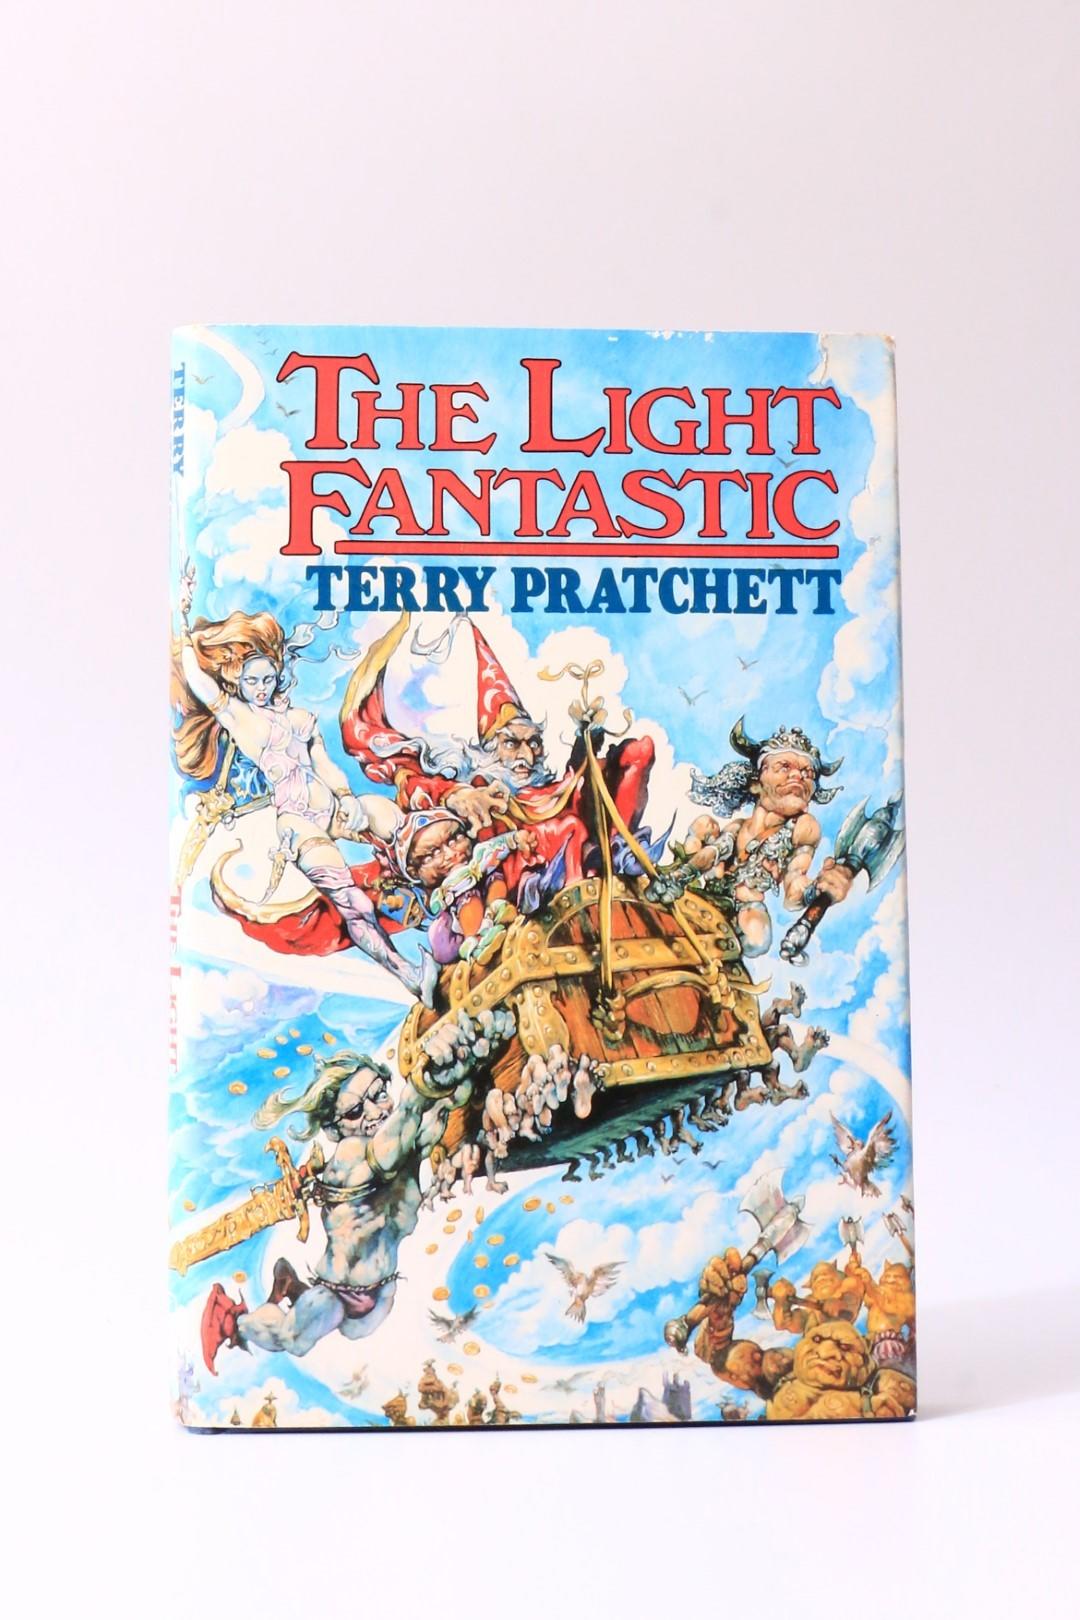 Terry Pratchett - The Light Fantastic - Colin Smythe, 1987, First Edition.